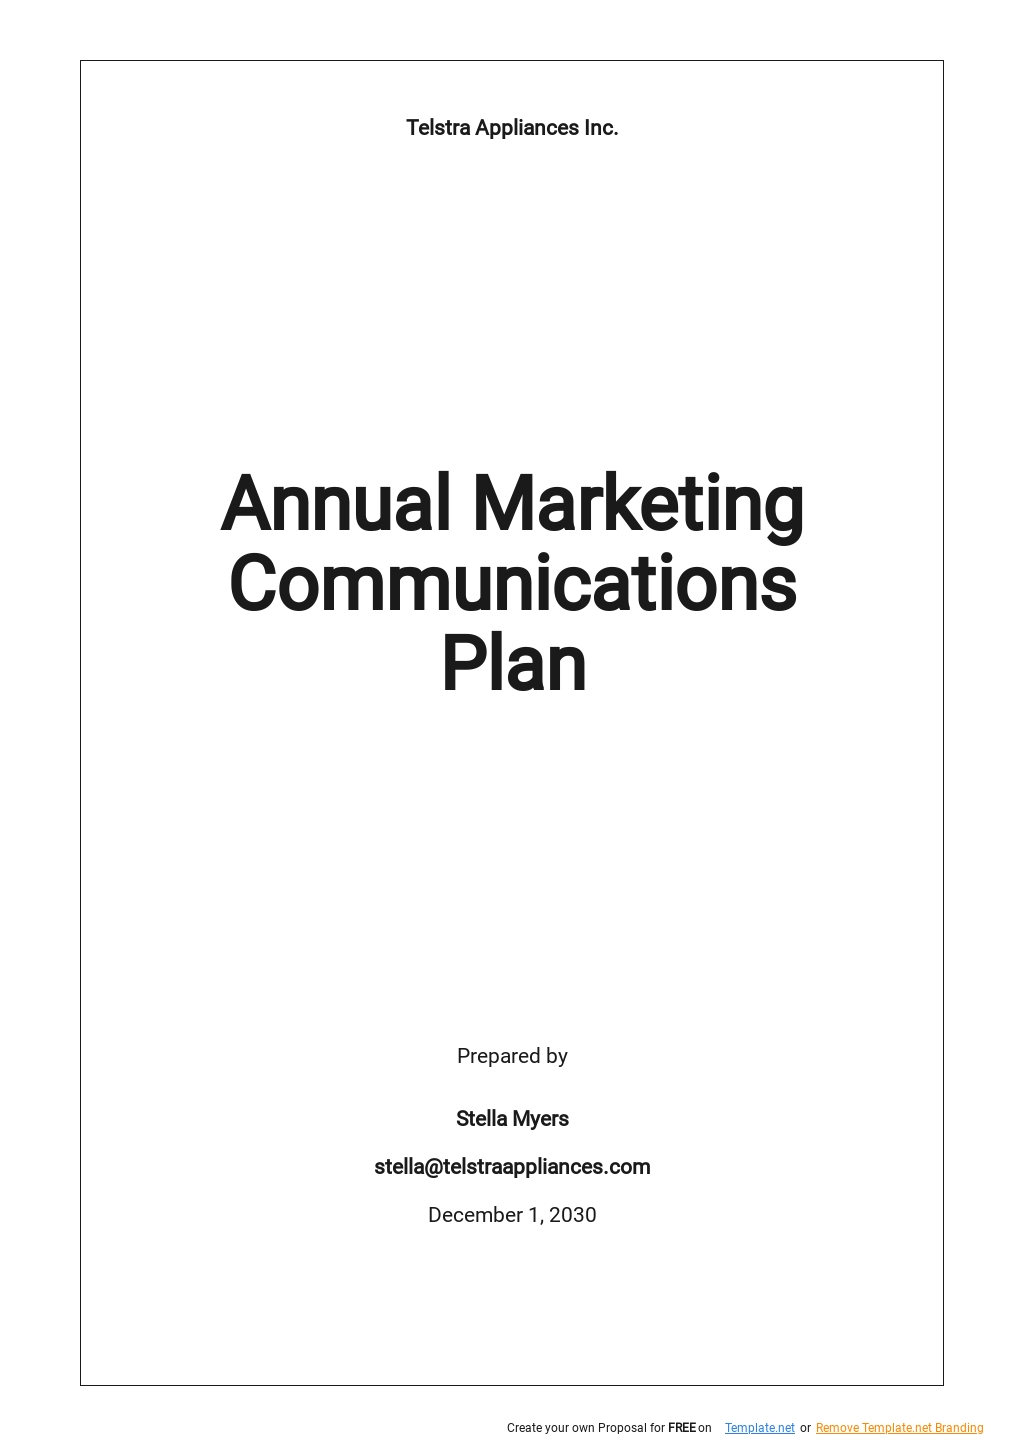 Annual Marketing Communications Plan Template.jpe